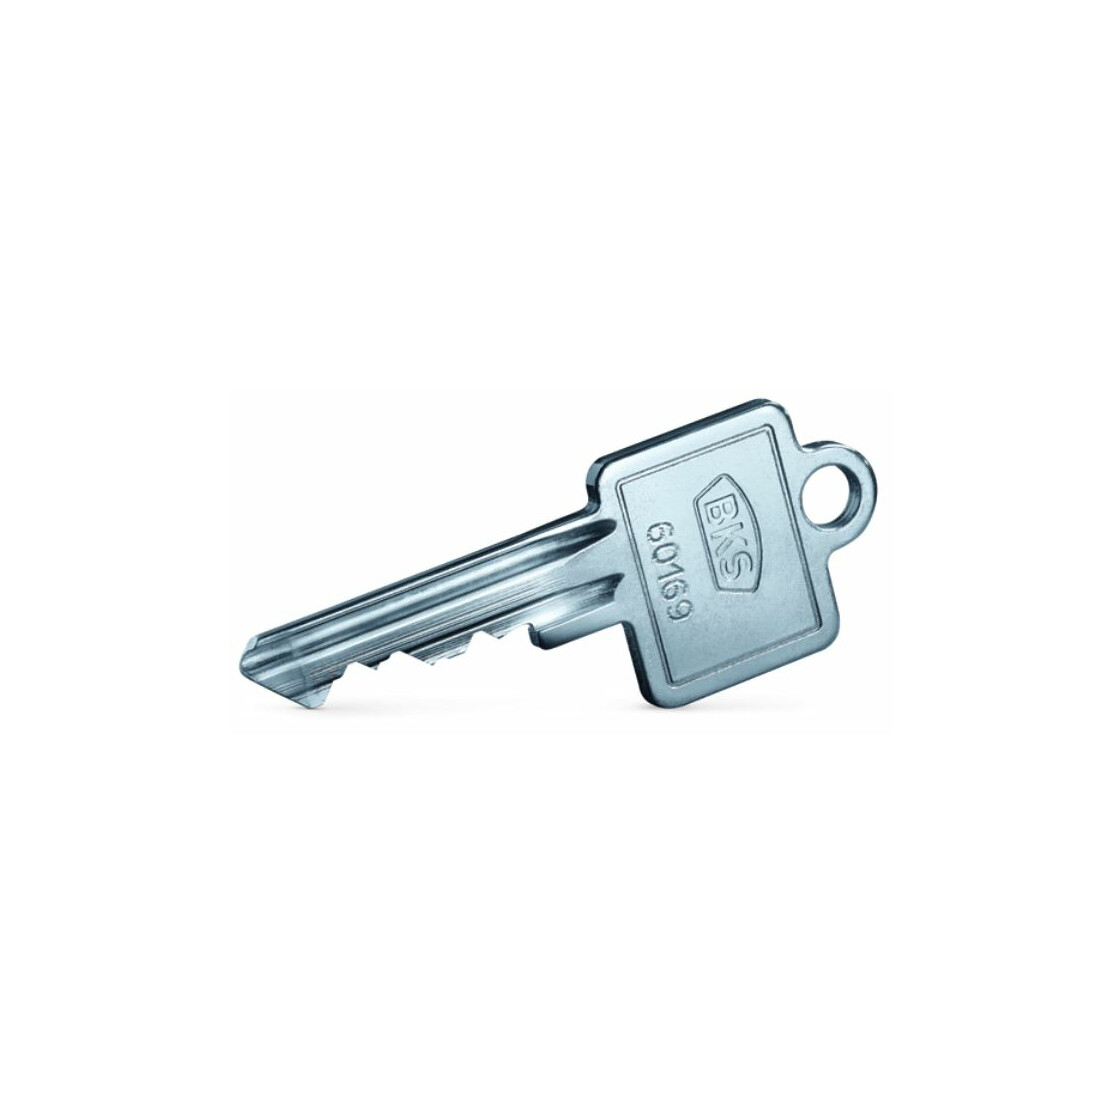 BKS - Schlüsselrohling, für Serie 88, B 4135, eckig, Stahl